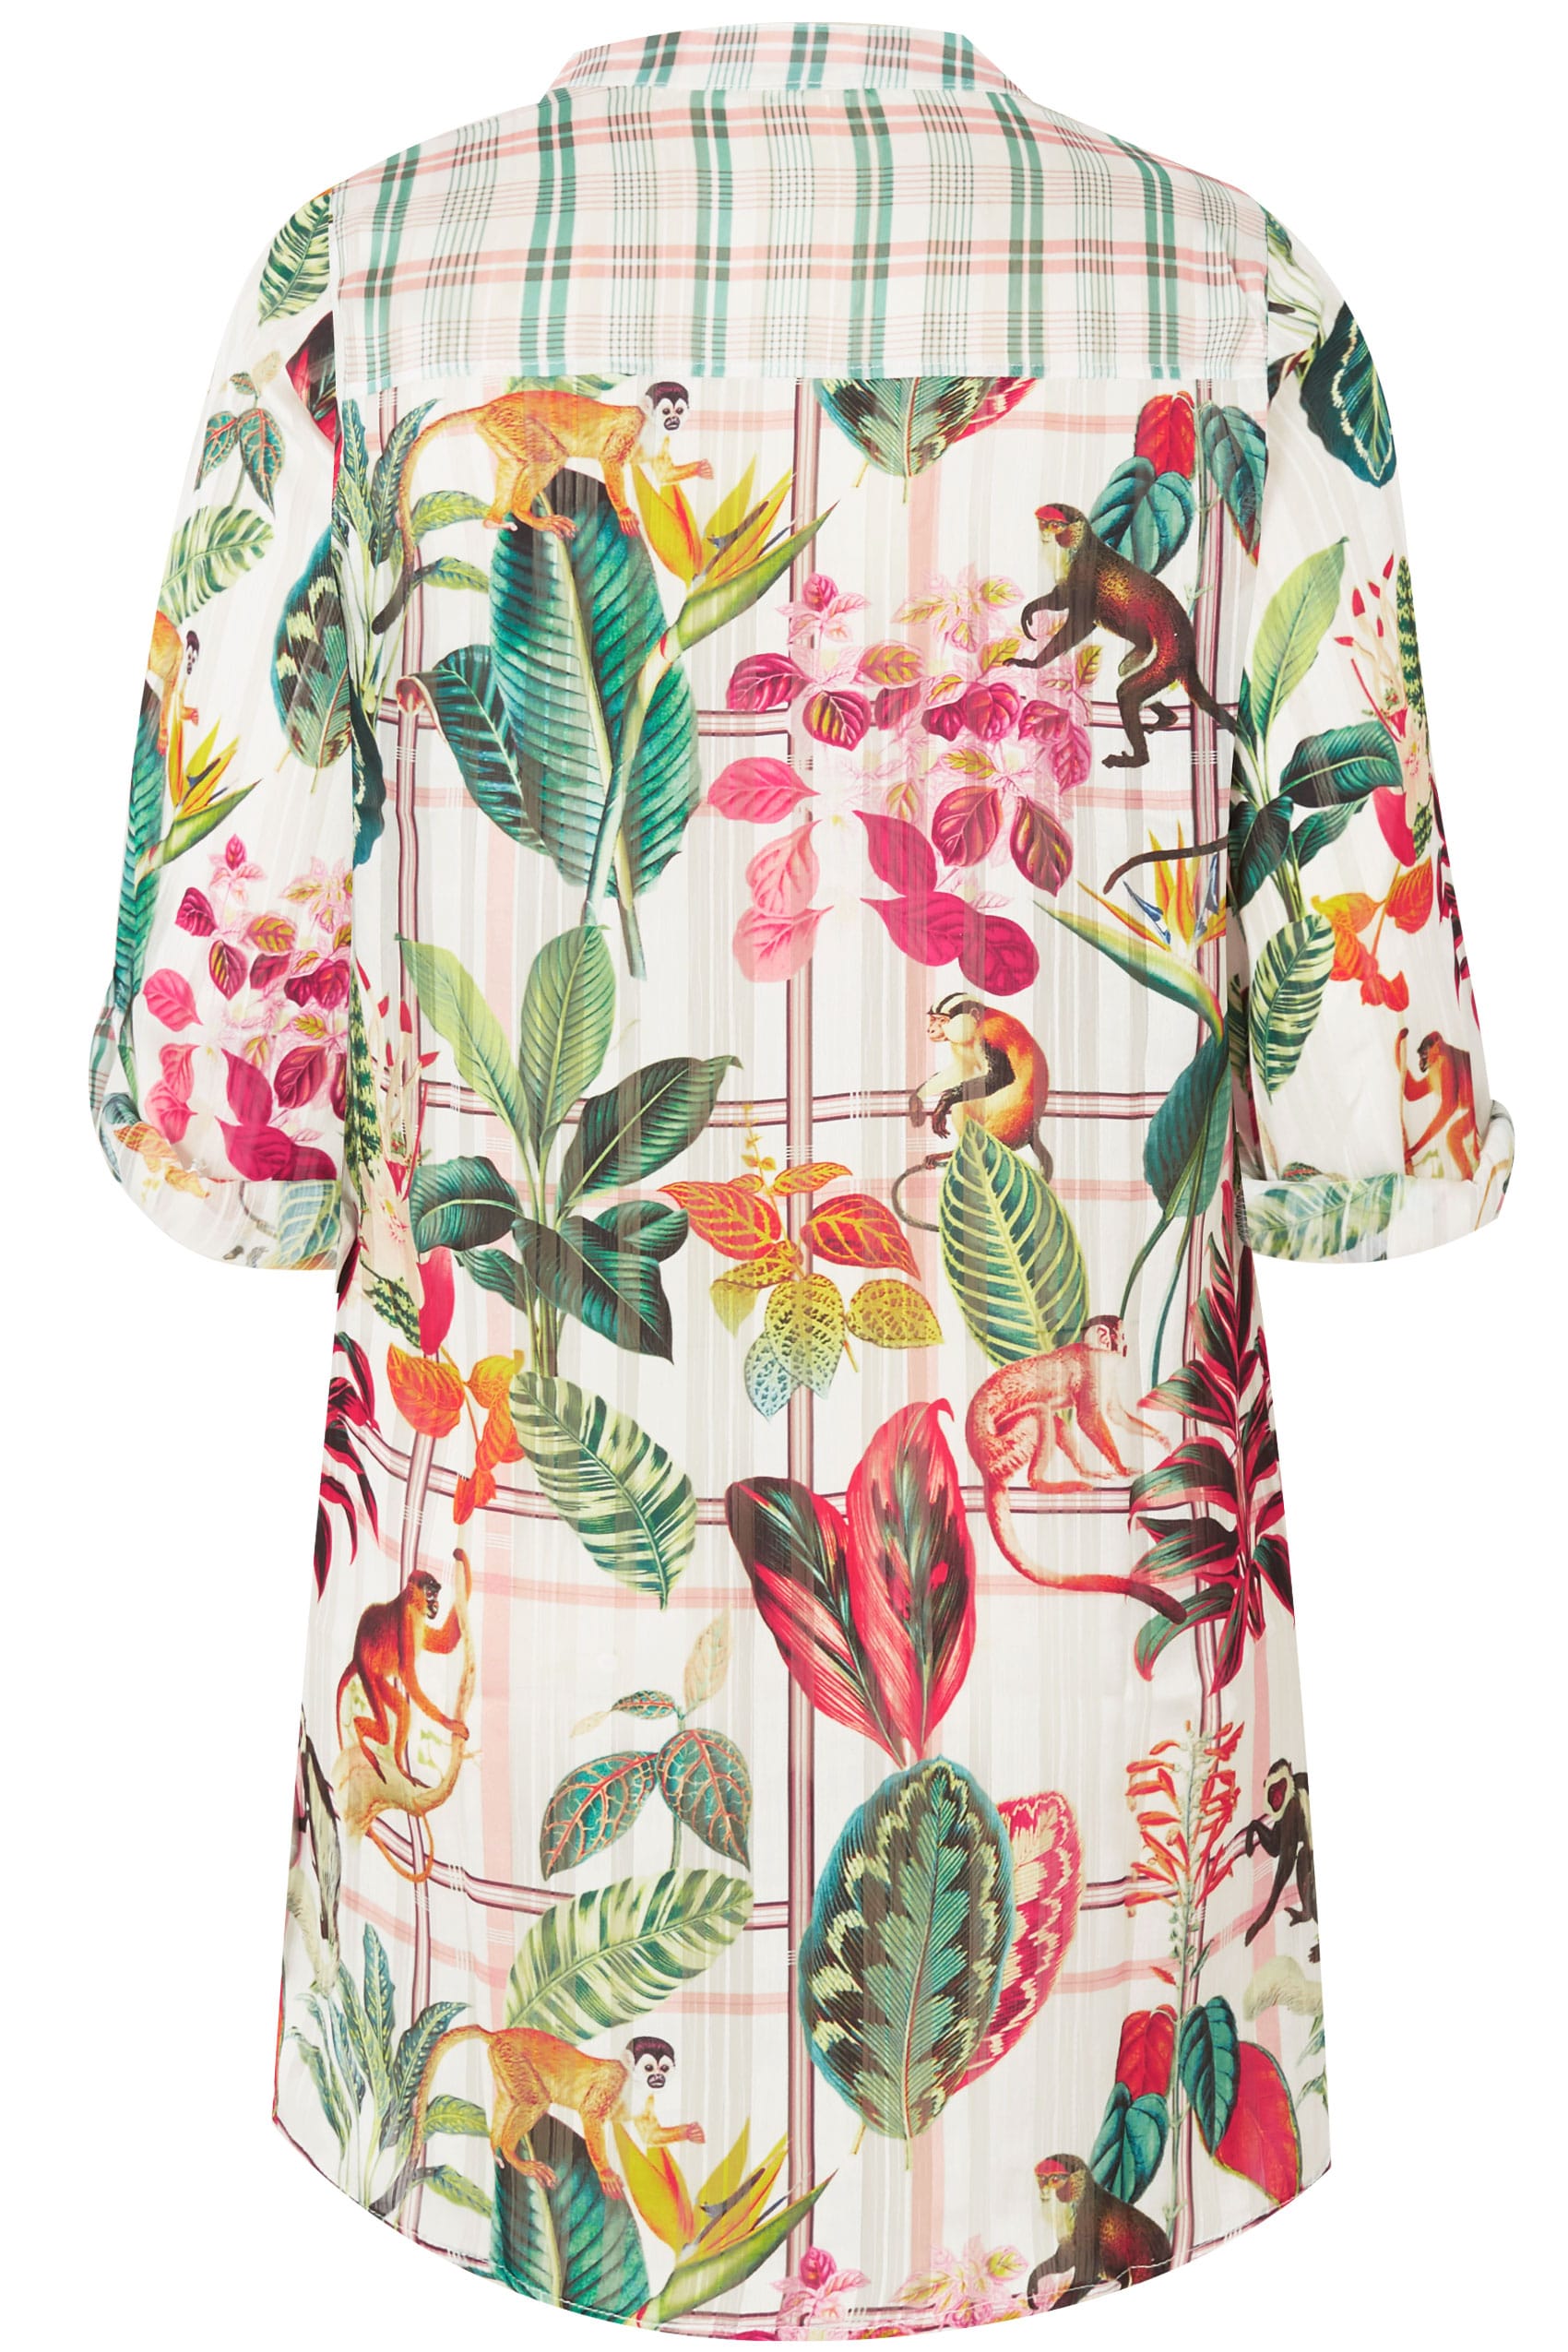 PAPRIKA Ivory & Multi Jungle Print Longline Shirt, plus size 16 to 26